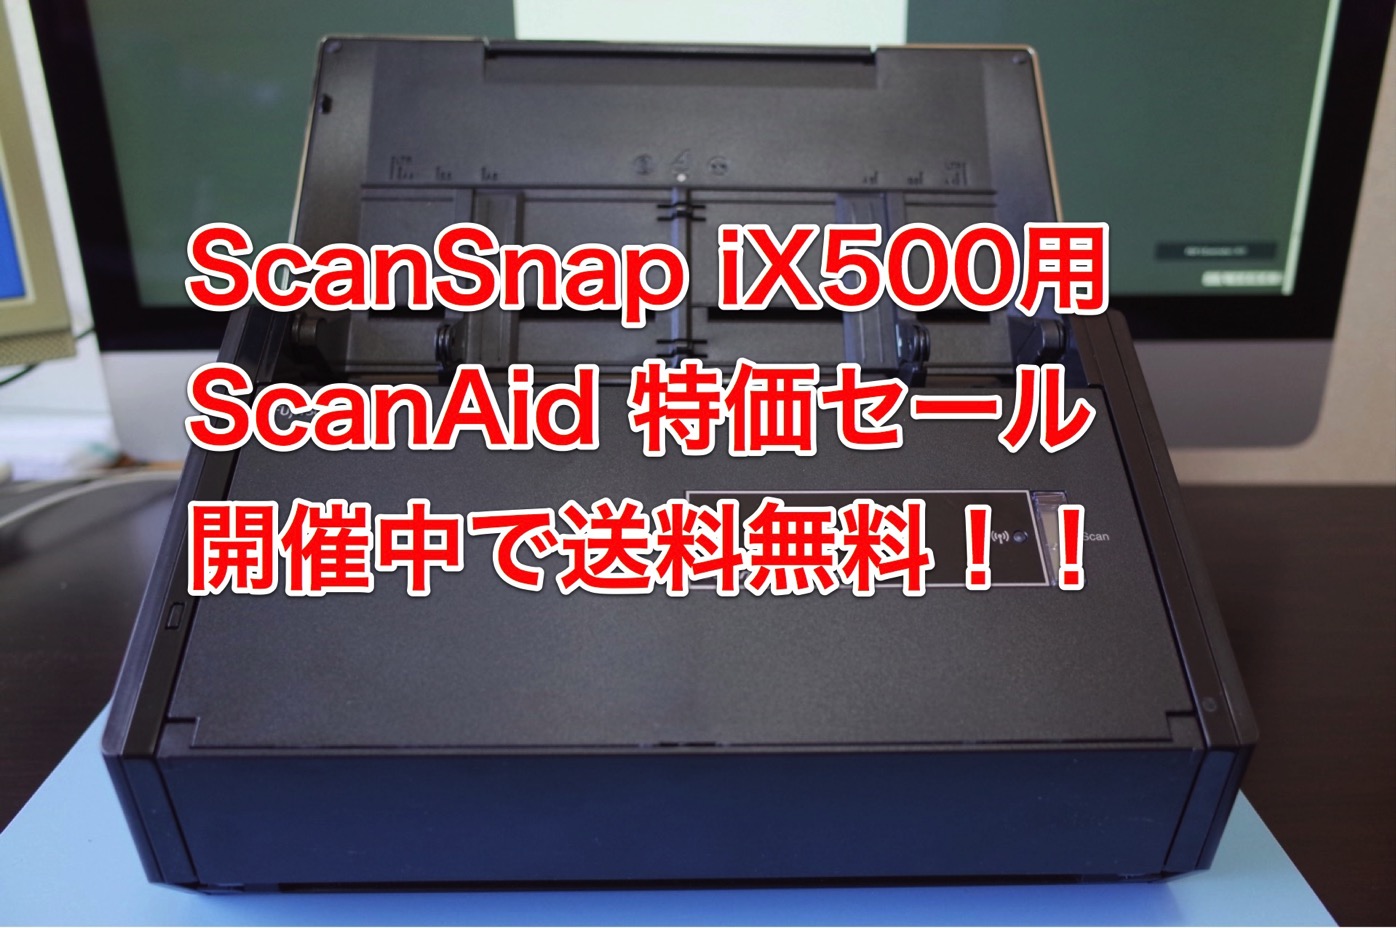 [ScanSnap]「快適スキャン」が甦る！ScanSnap iX500 メンテナンスキット「ScanAid」が限定特価！